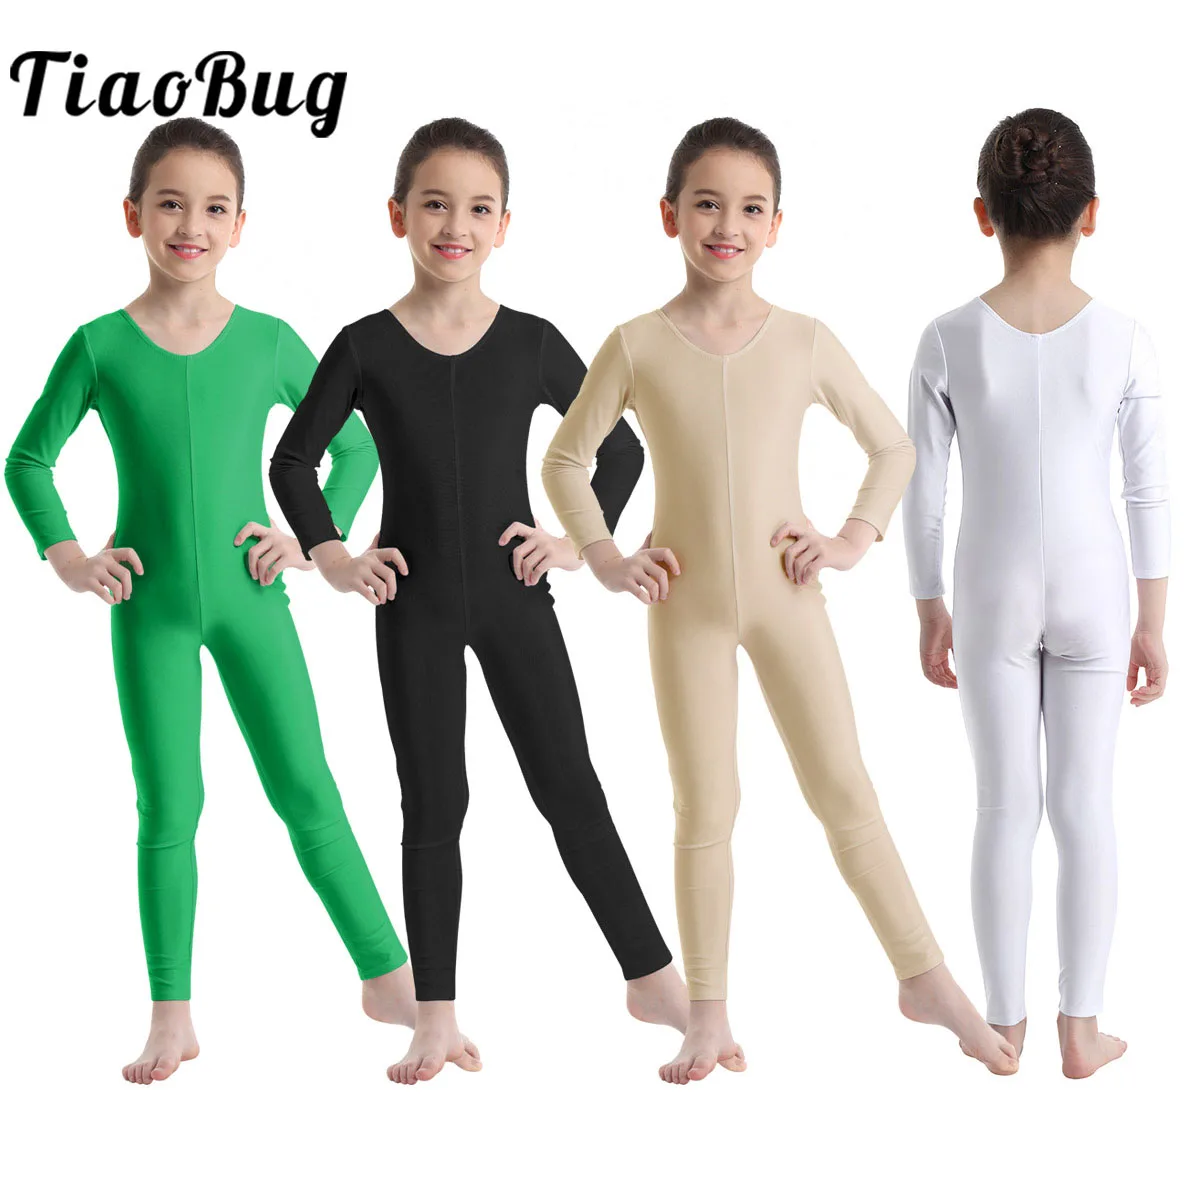 TiaoBug-leotardo de gimnasia de manga larga para niños y niñas, Body de baile deportivo, leotardo de Ballet, traje de baile de escenario